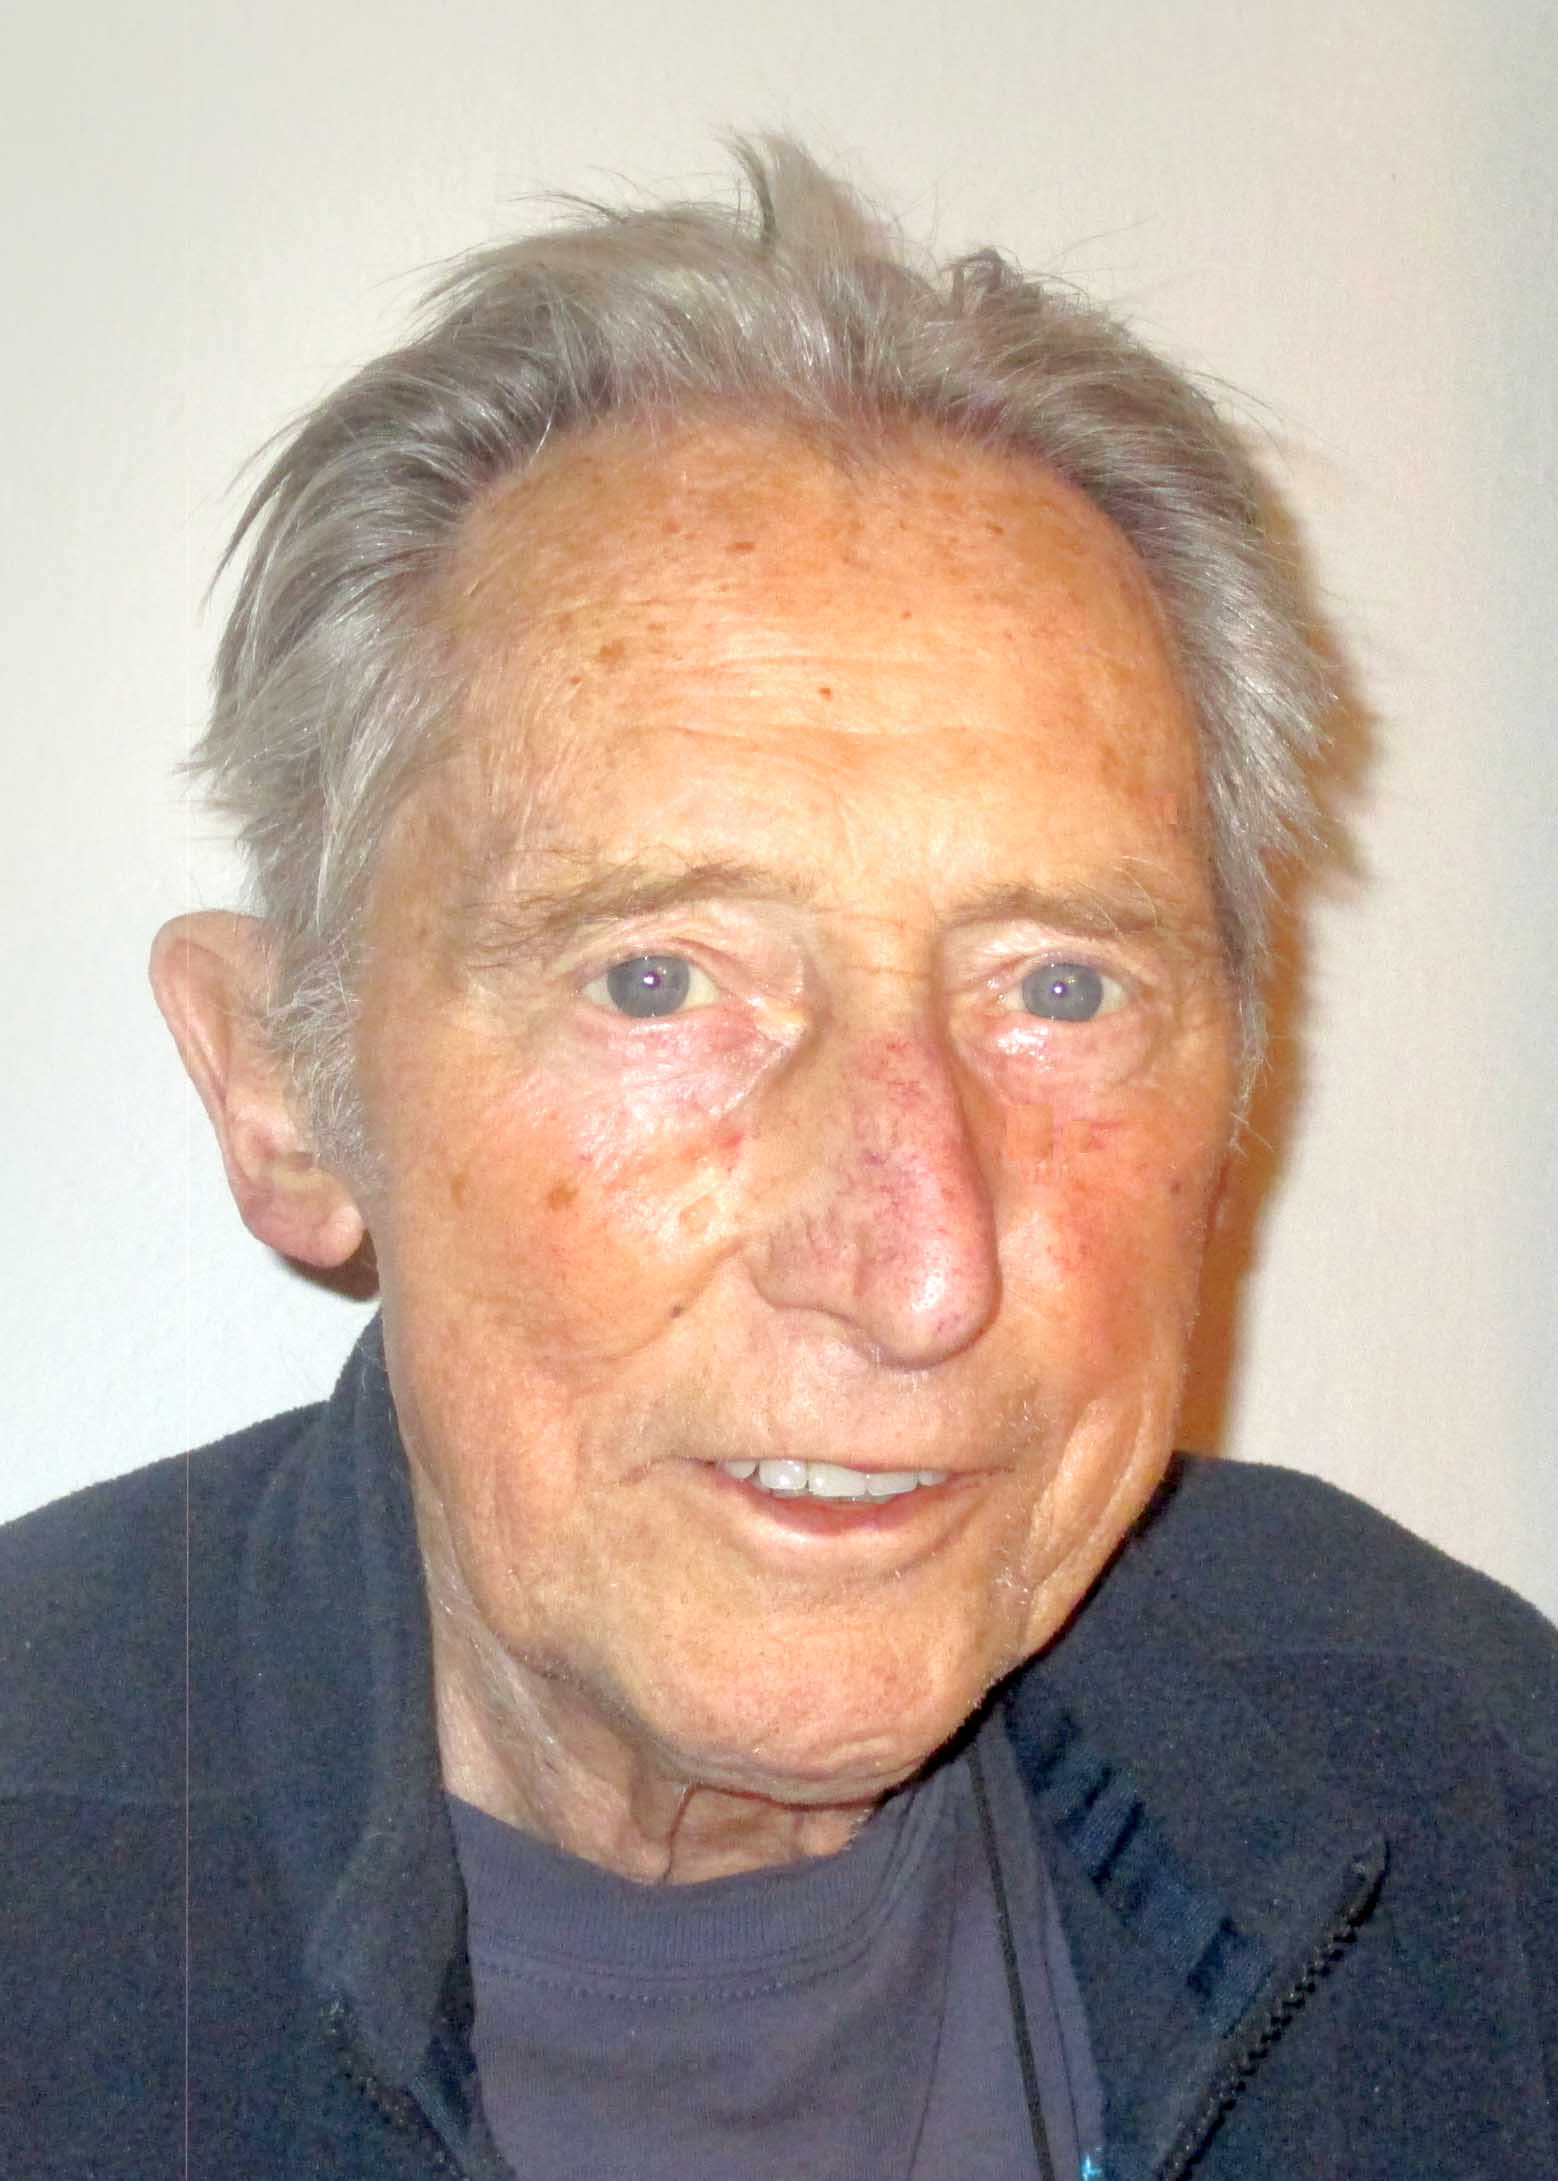 Leonhard Hofer (85)